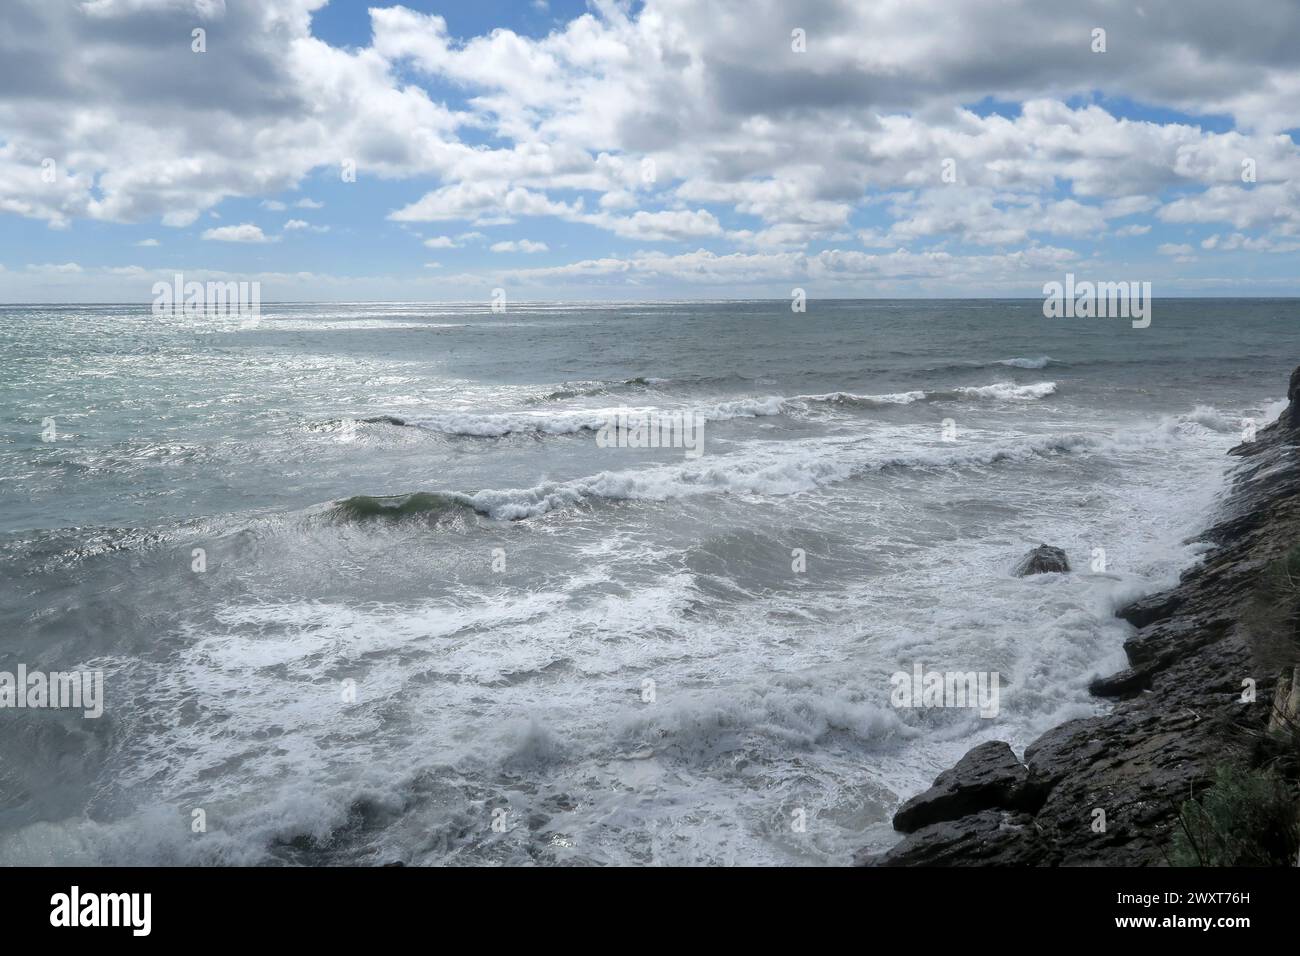 Some waves crashing onto sandy beach shore Stock Photo